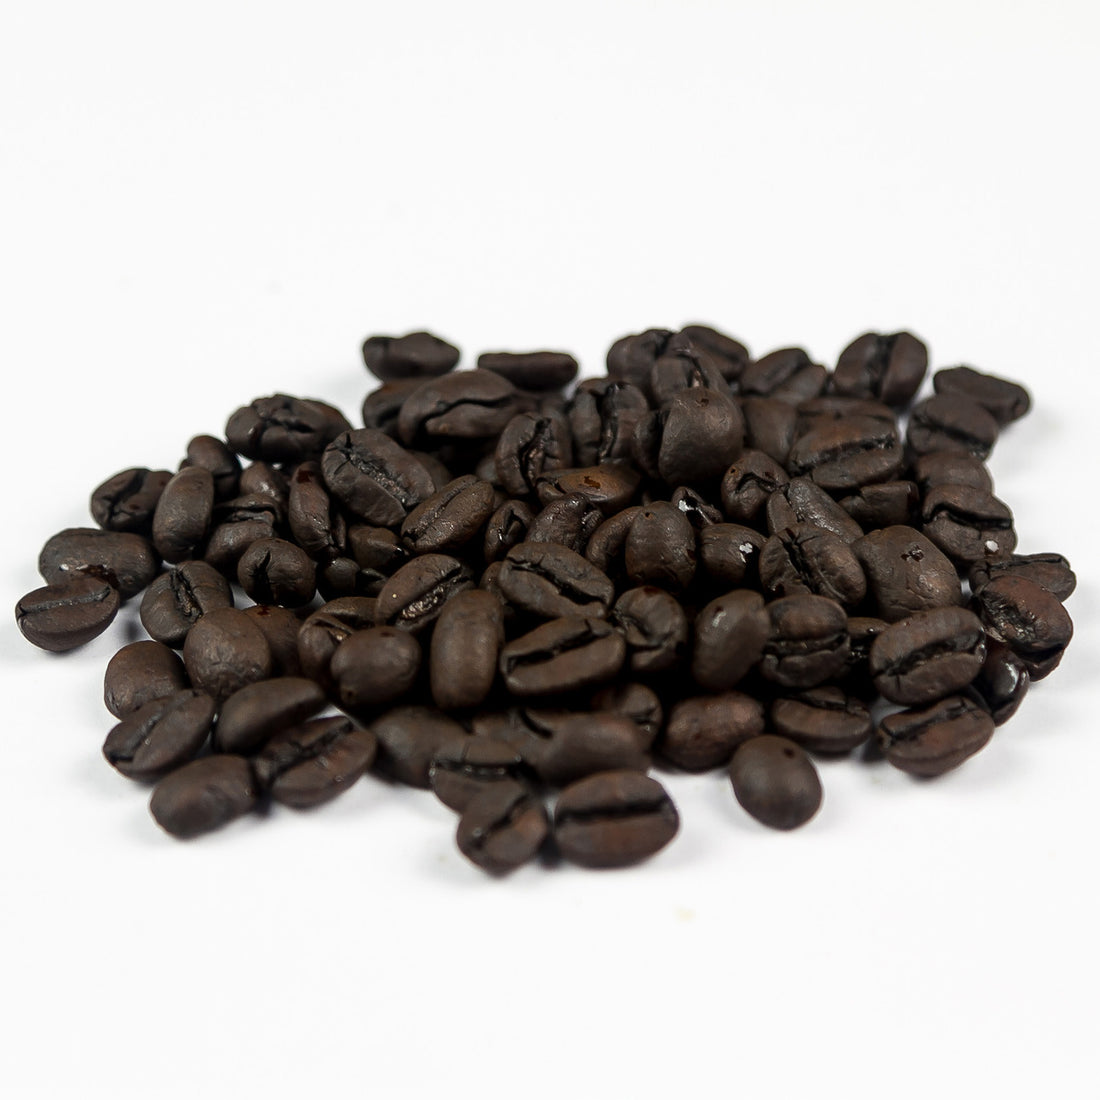 Redber, GUATEMALA DECAF SWISS WATER - Dark Roast, Redber Coffee